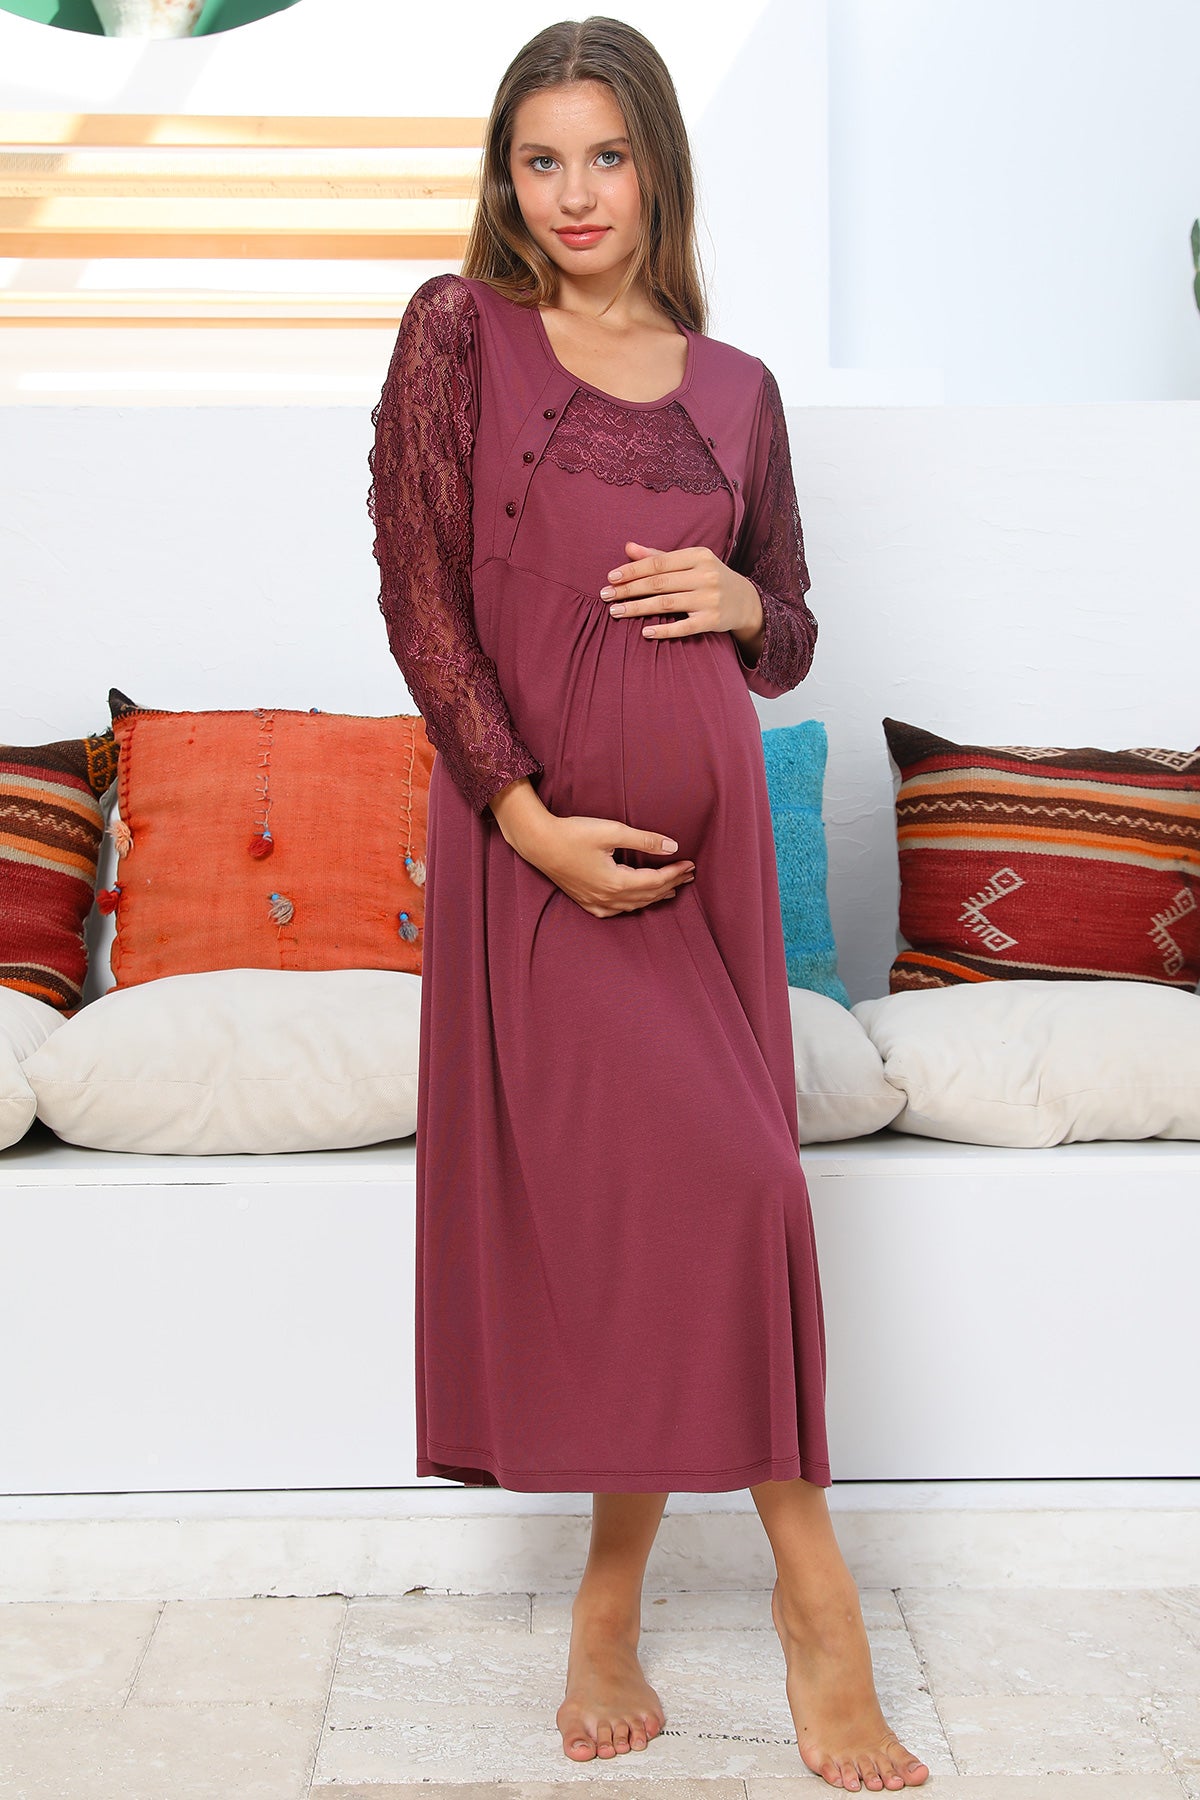 Shopymommy 55103 Elegance Lace Sleeves Maternity & Nursing Nightgown Plum